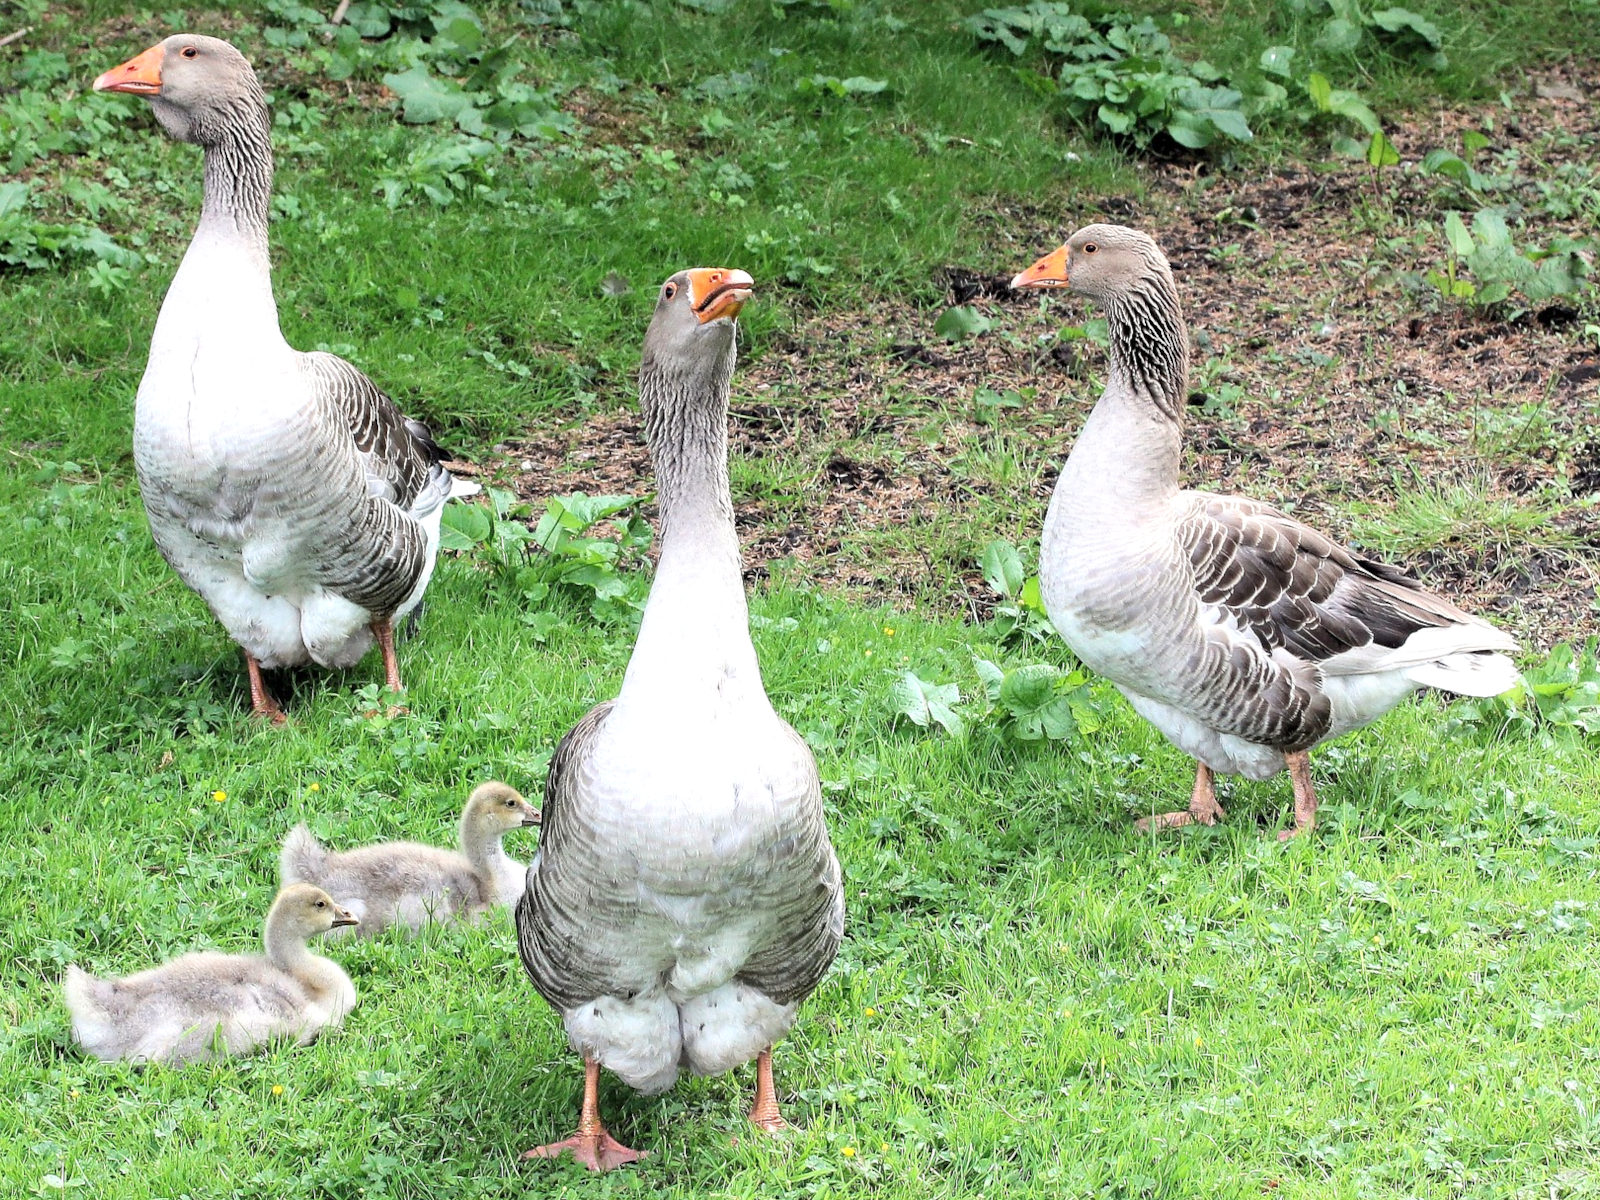 pomeranian geese